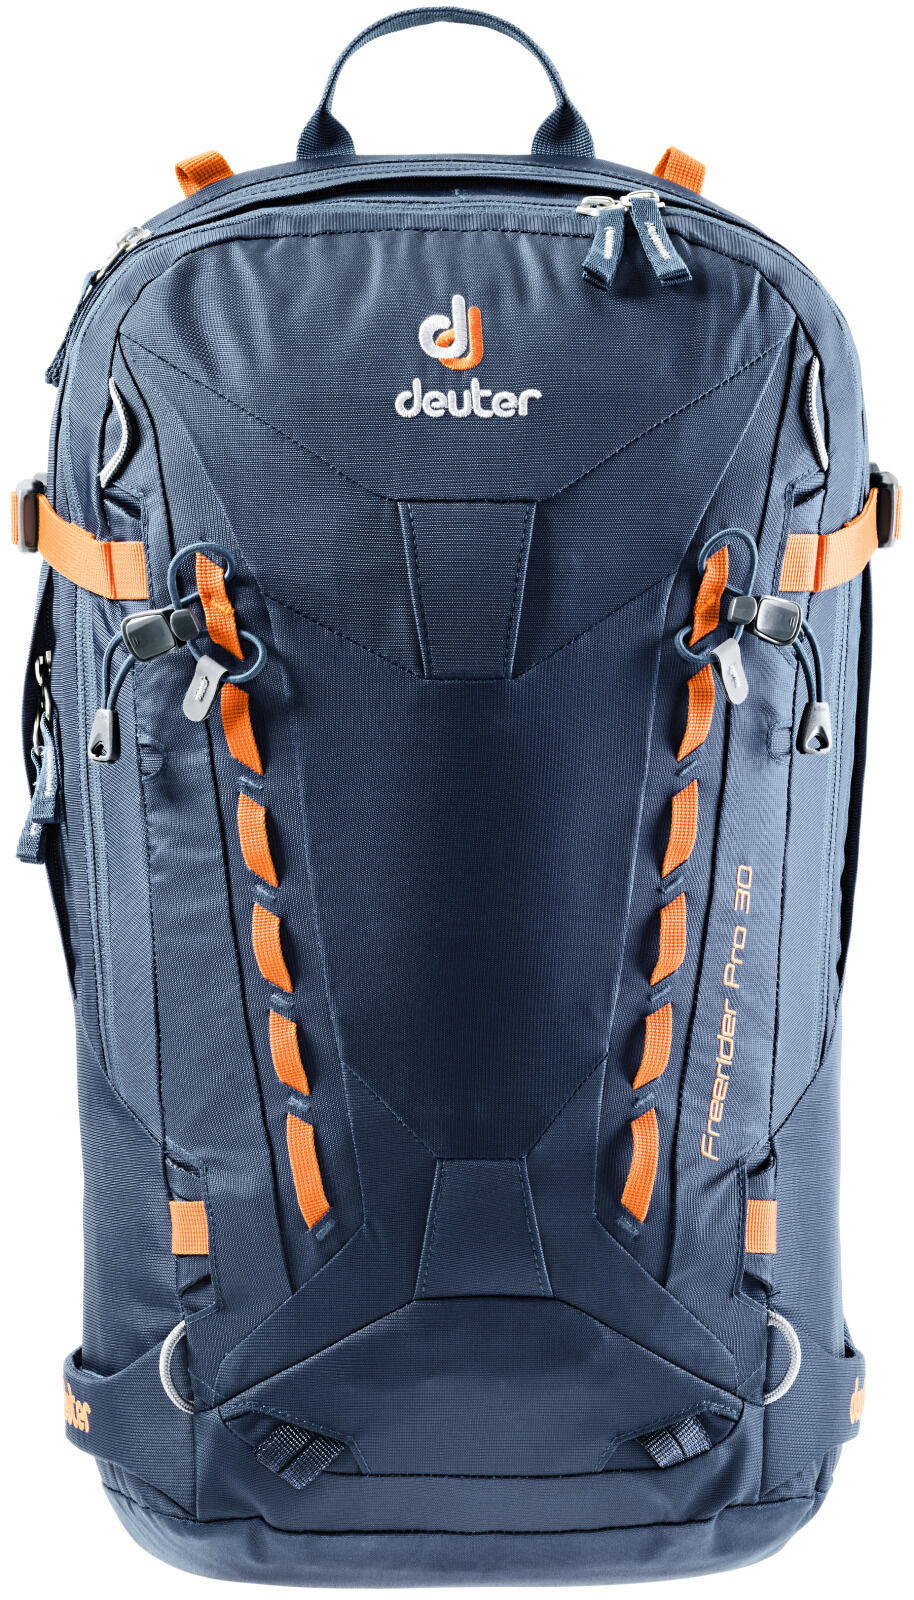 Deuter - Freerider Pro 30 - Zaino da sci alpinismo